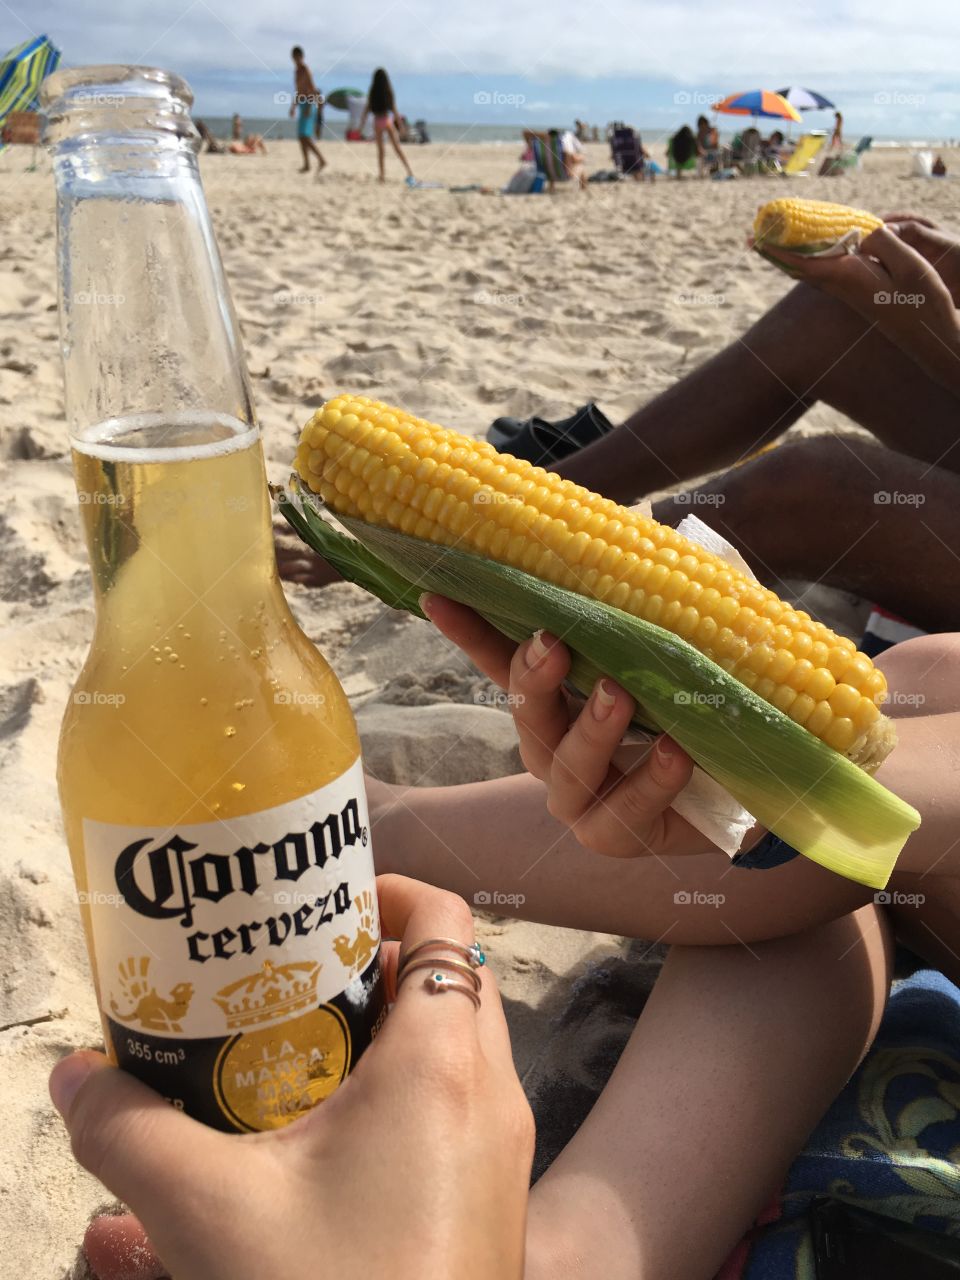 Corona summer and corn 